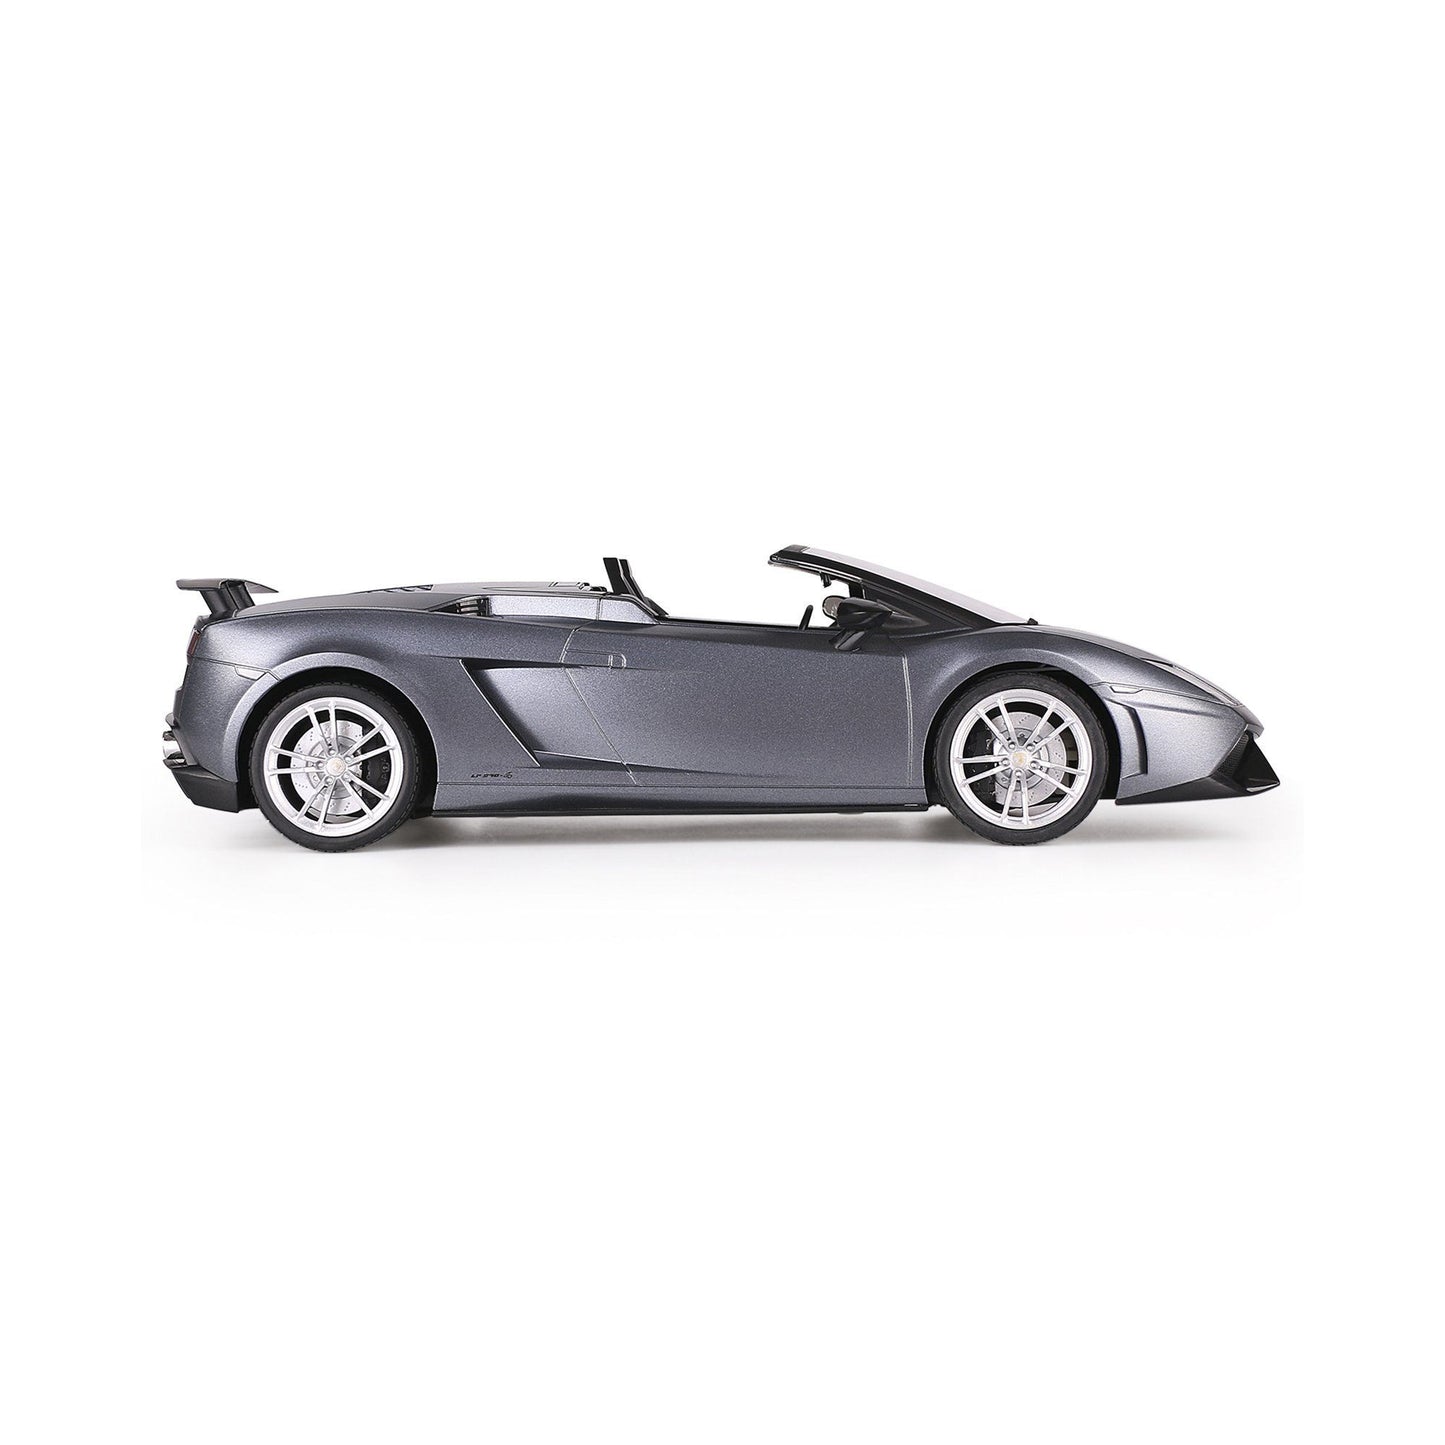 Freddo Toys | Lamborghini LP570 Ragtop Remote Controlled Car